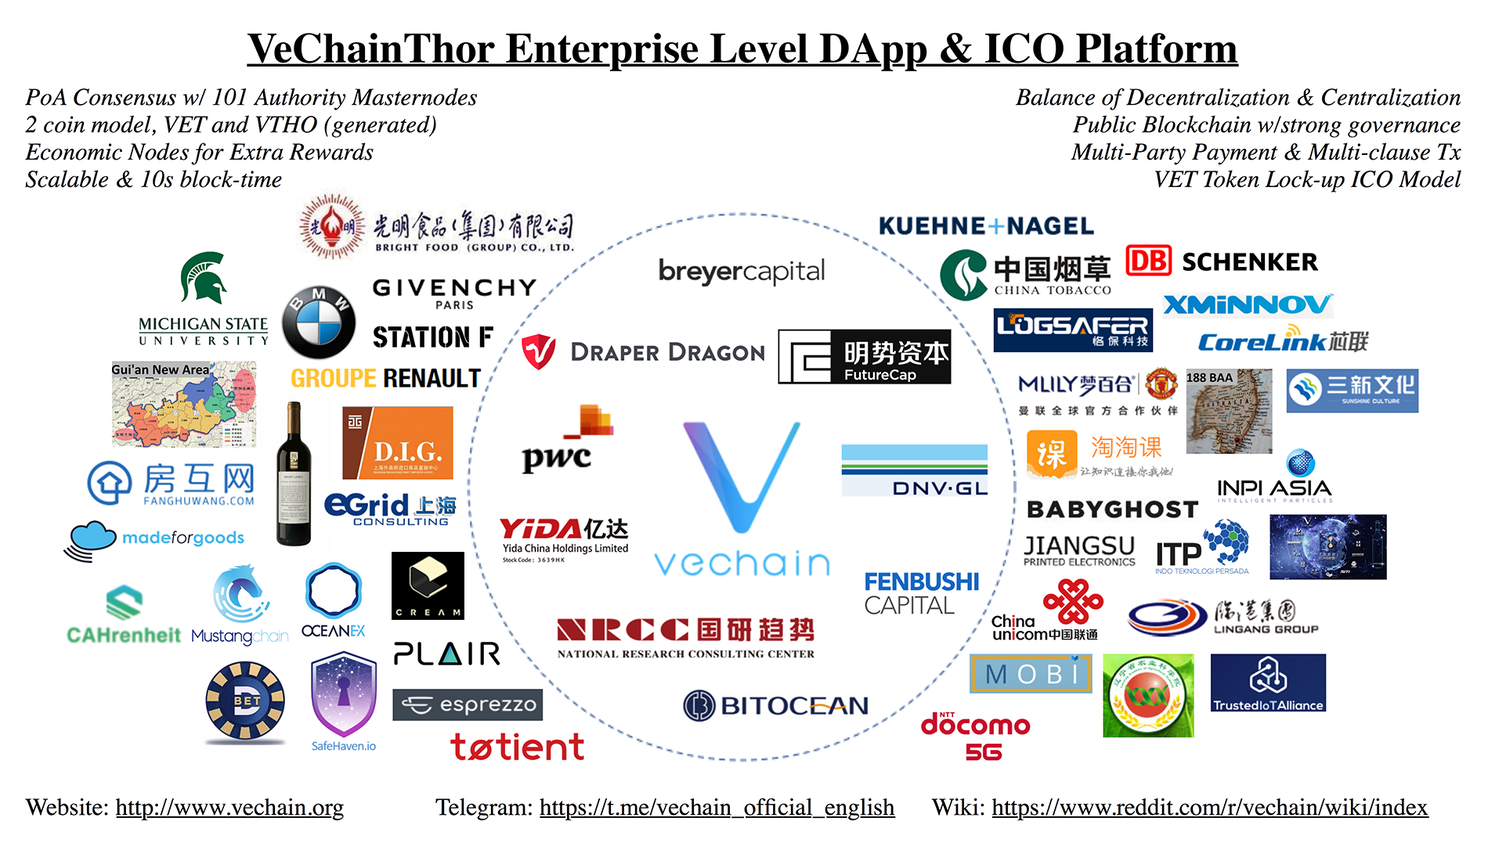 VeChainThor Enterprise Level DApp and ICO Platform